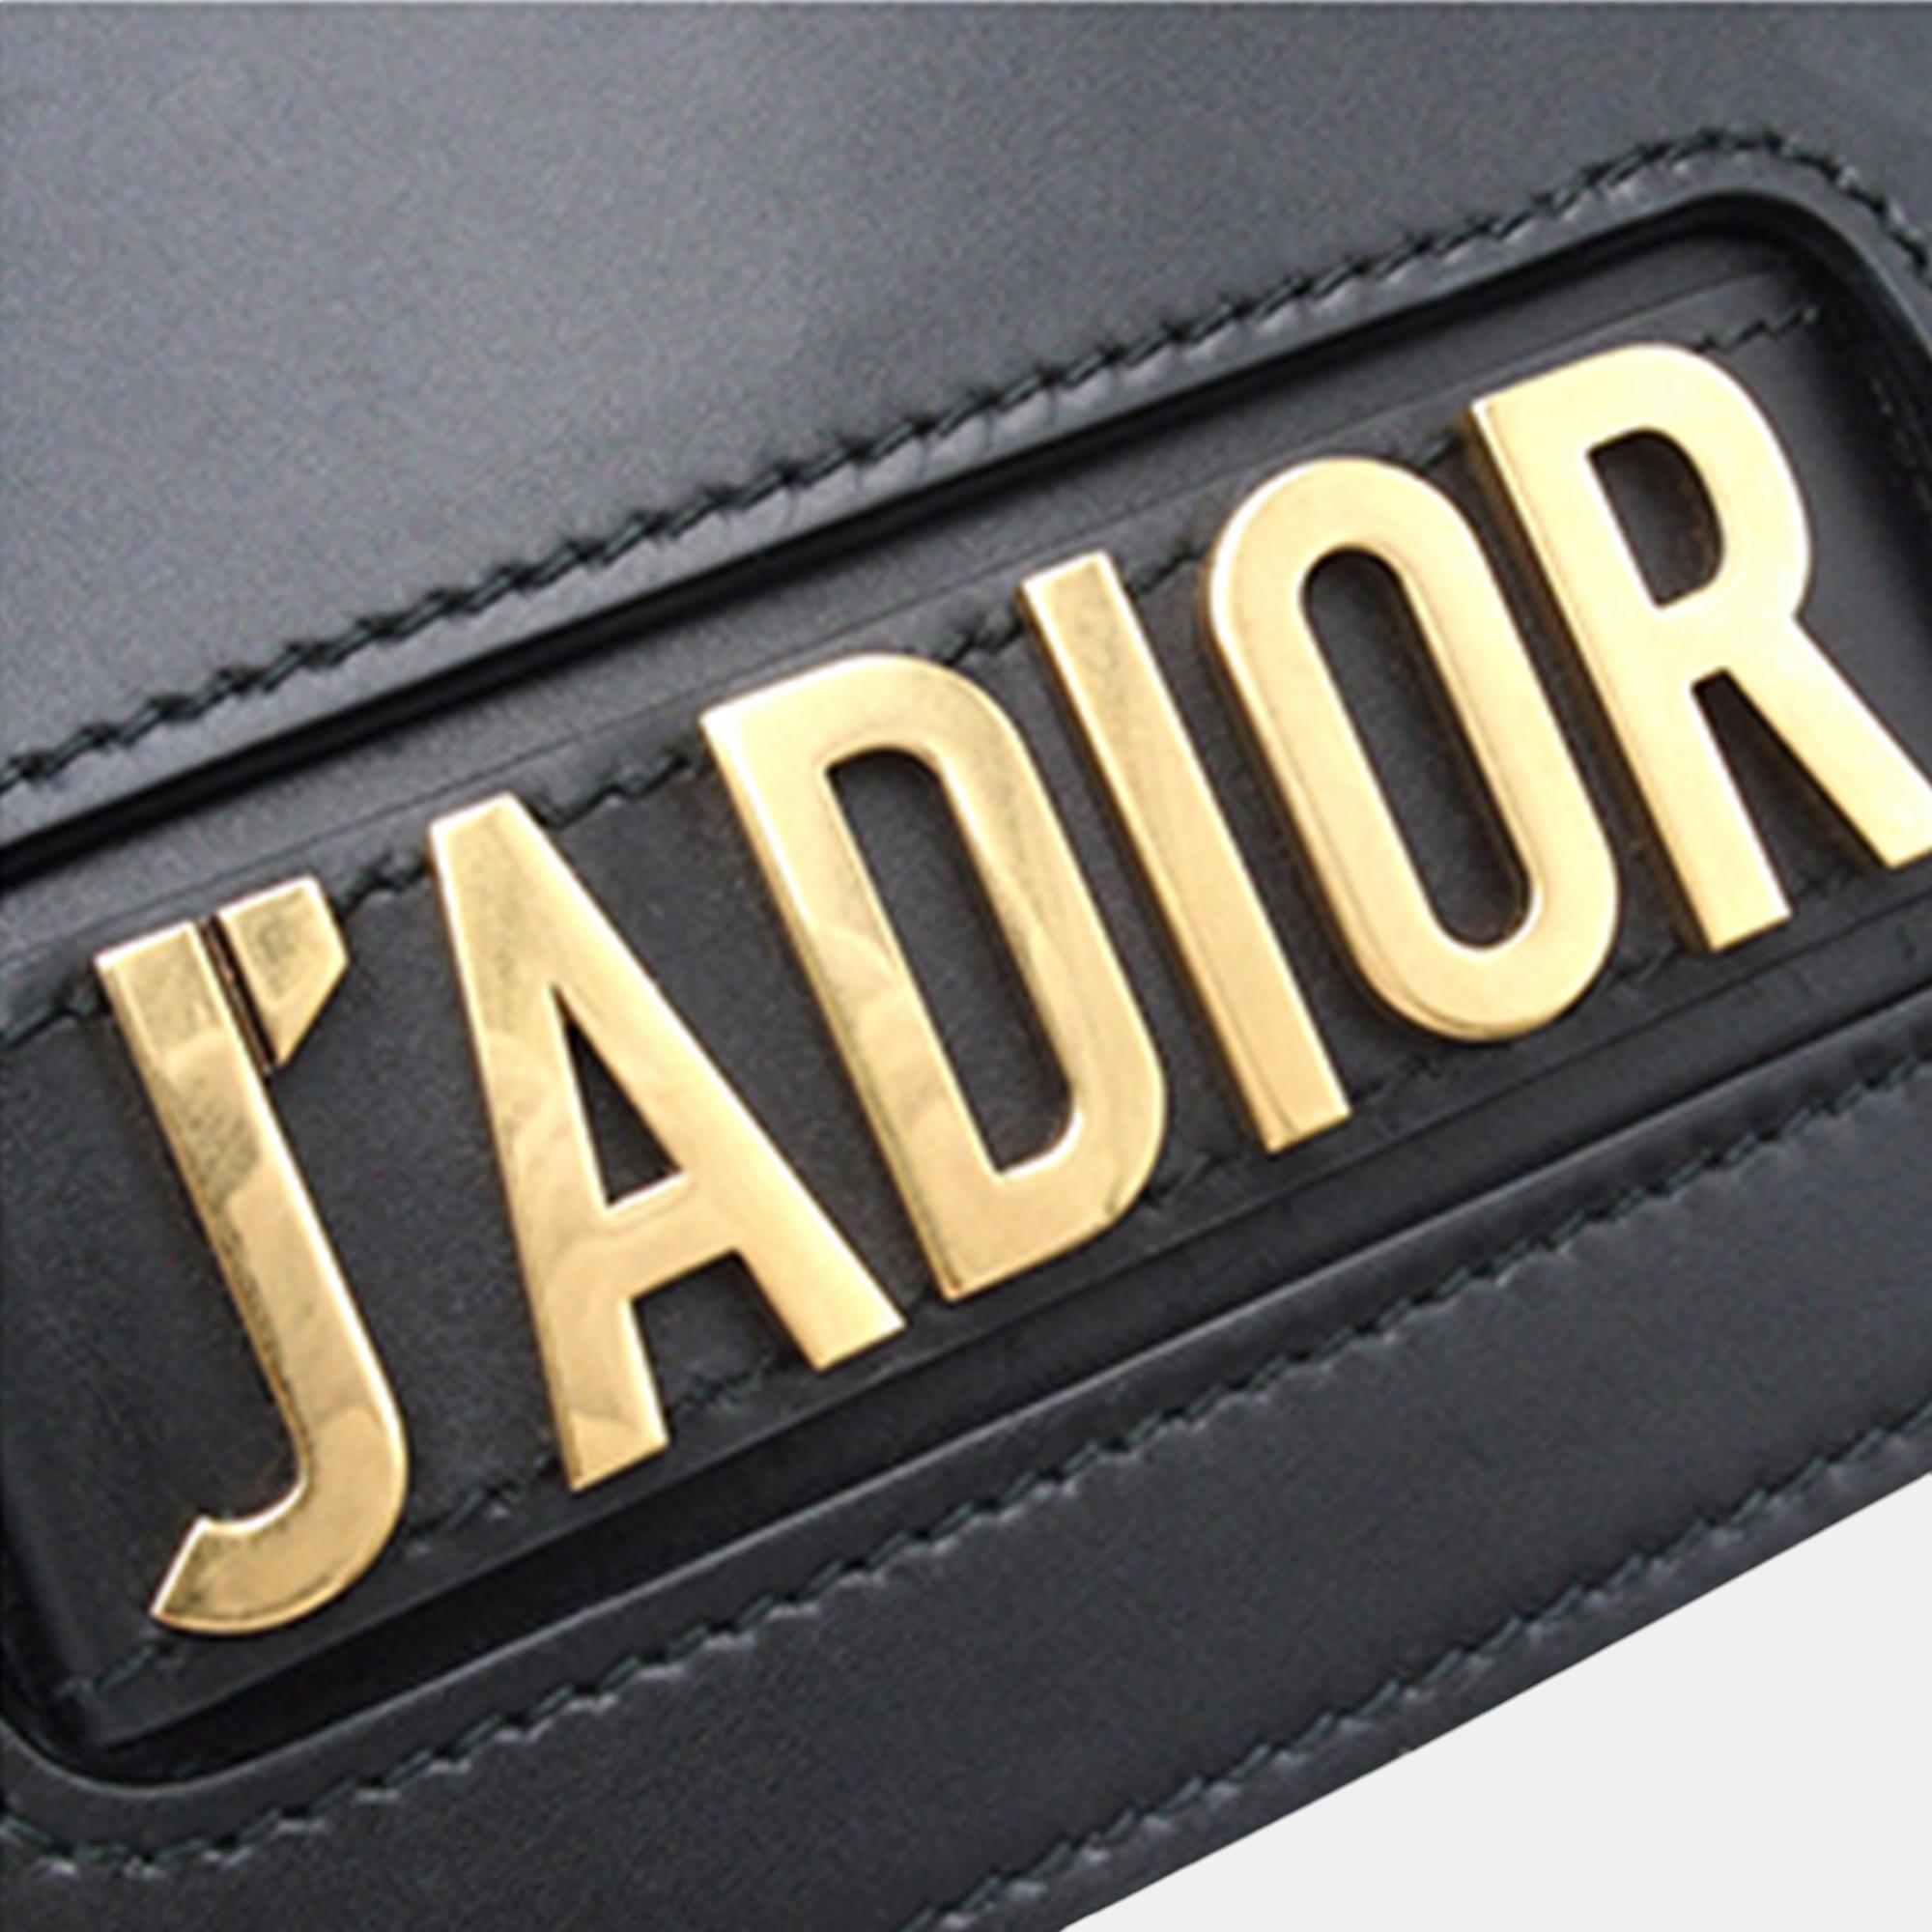 Dior Black Medium JAdior Chain Bag